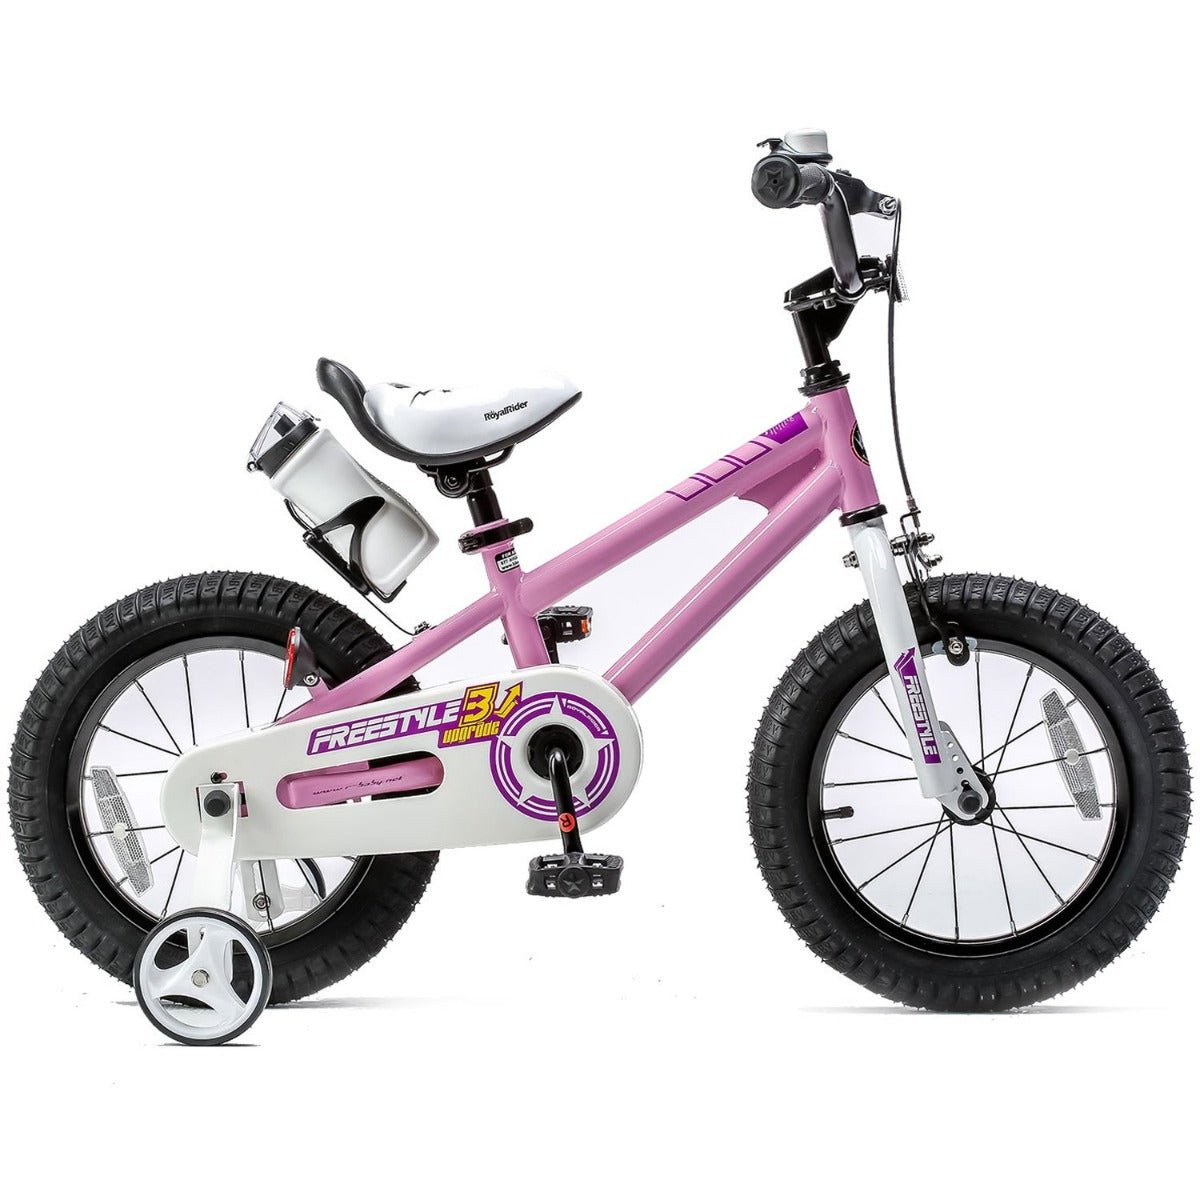 RoyalBaby Freestyle 12" Unisex Kids Bike With Stabilisers - Pink